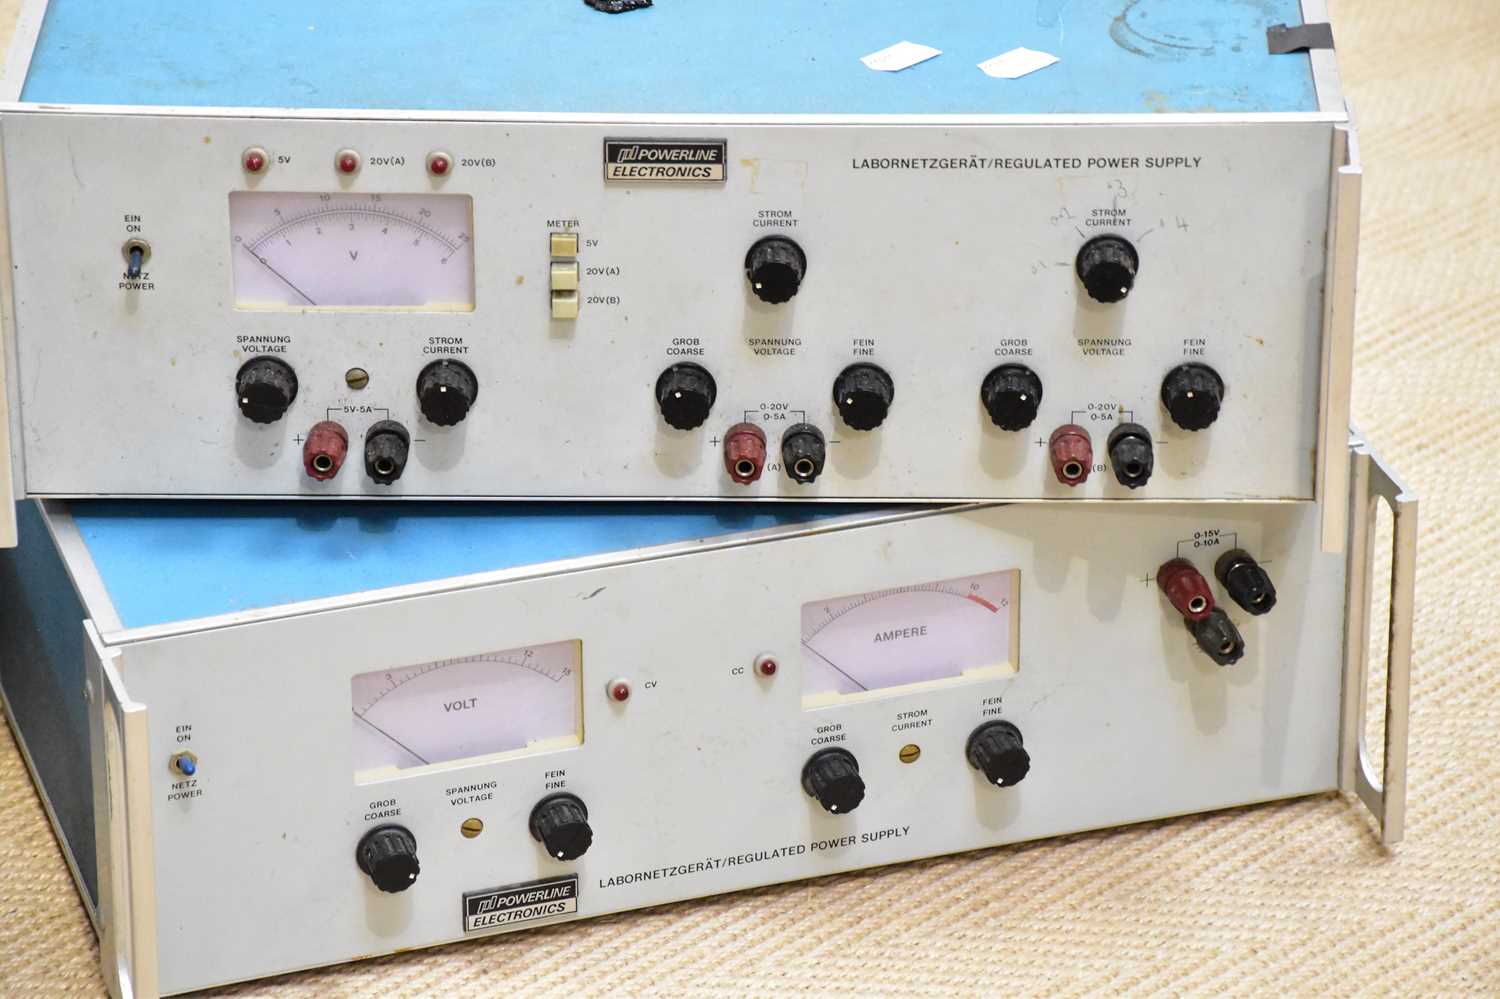 TEKTRONIX; a model 465B oscilliscope, with a powerline electronics regulated power supply and - Bild 2 aus 4